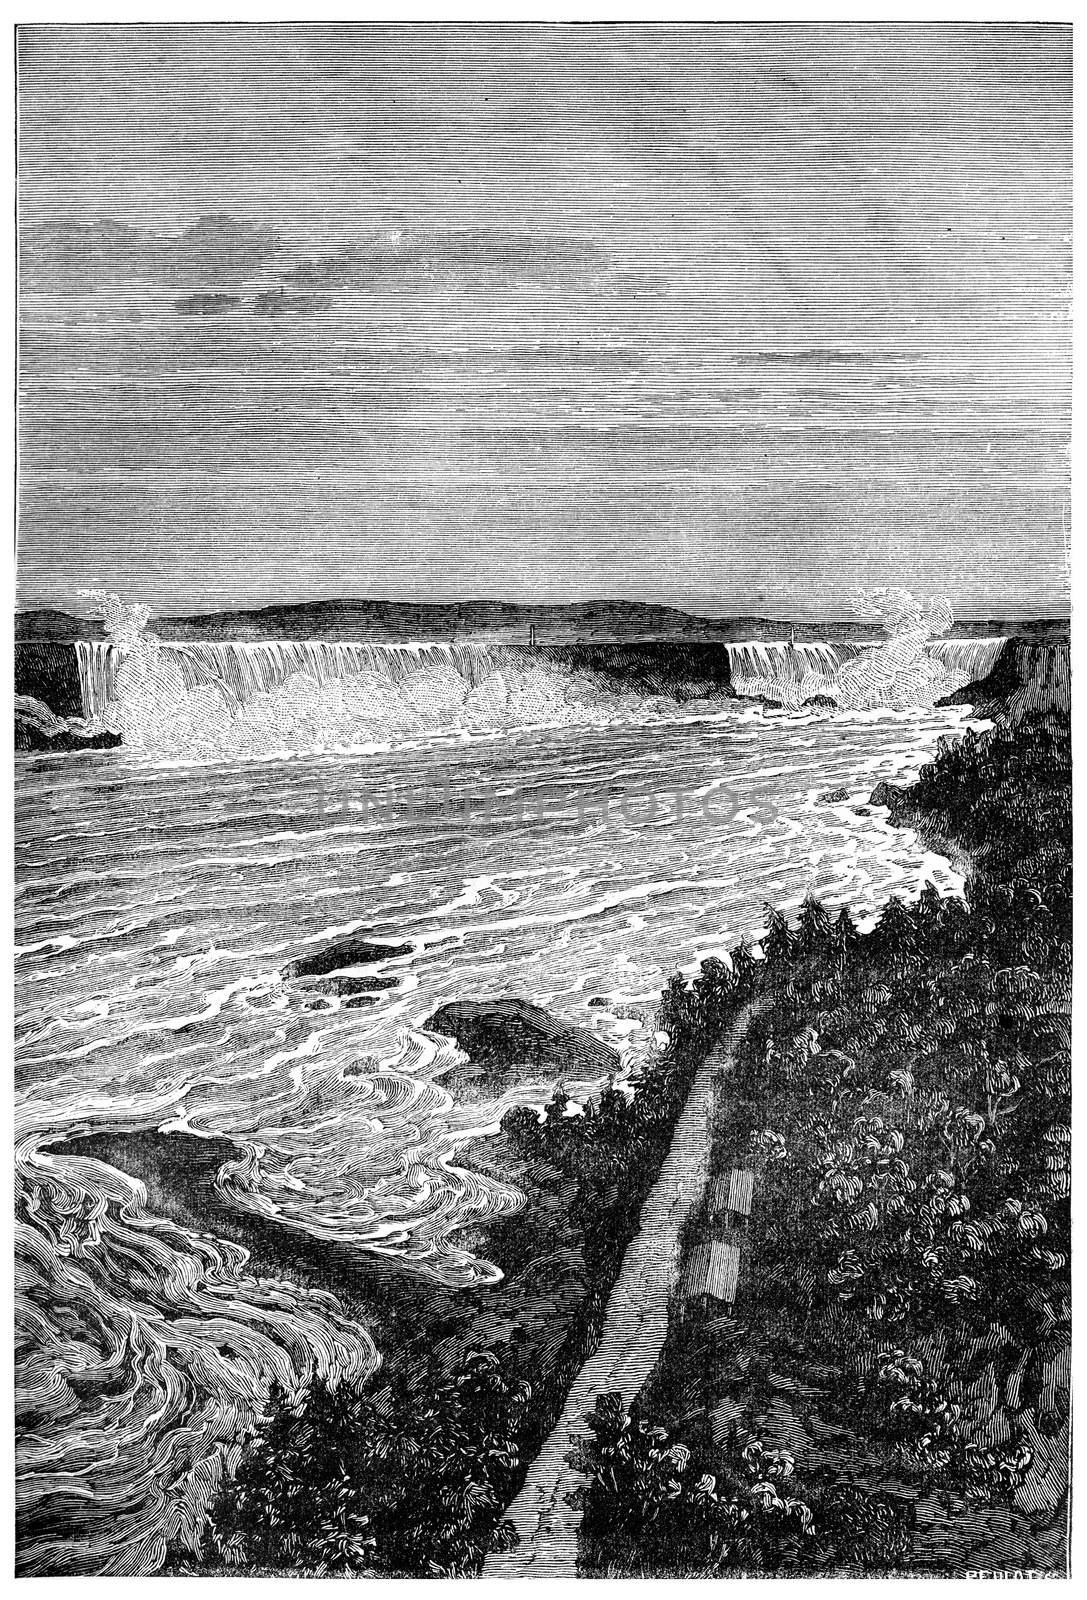 Niagara falls, vintage engraving. by Morphart